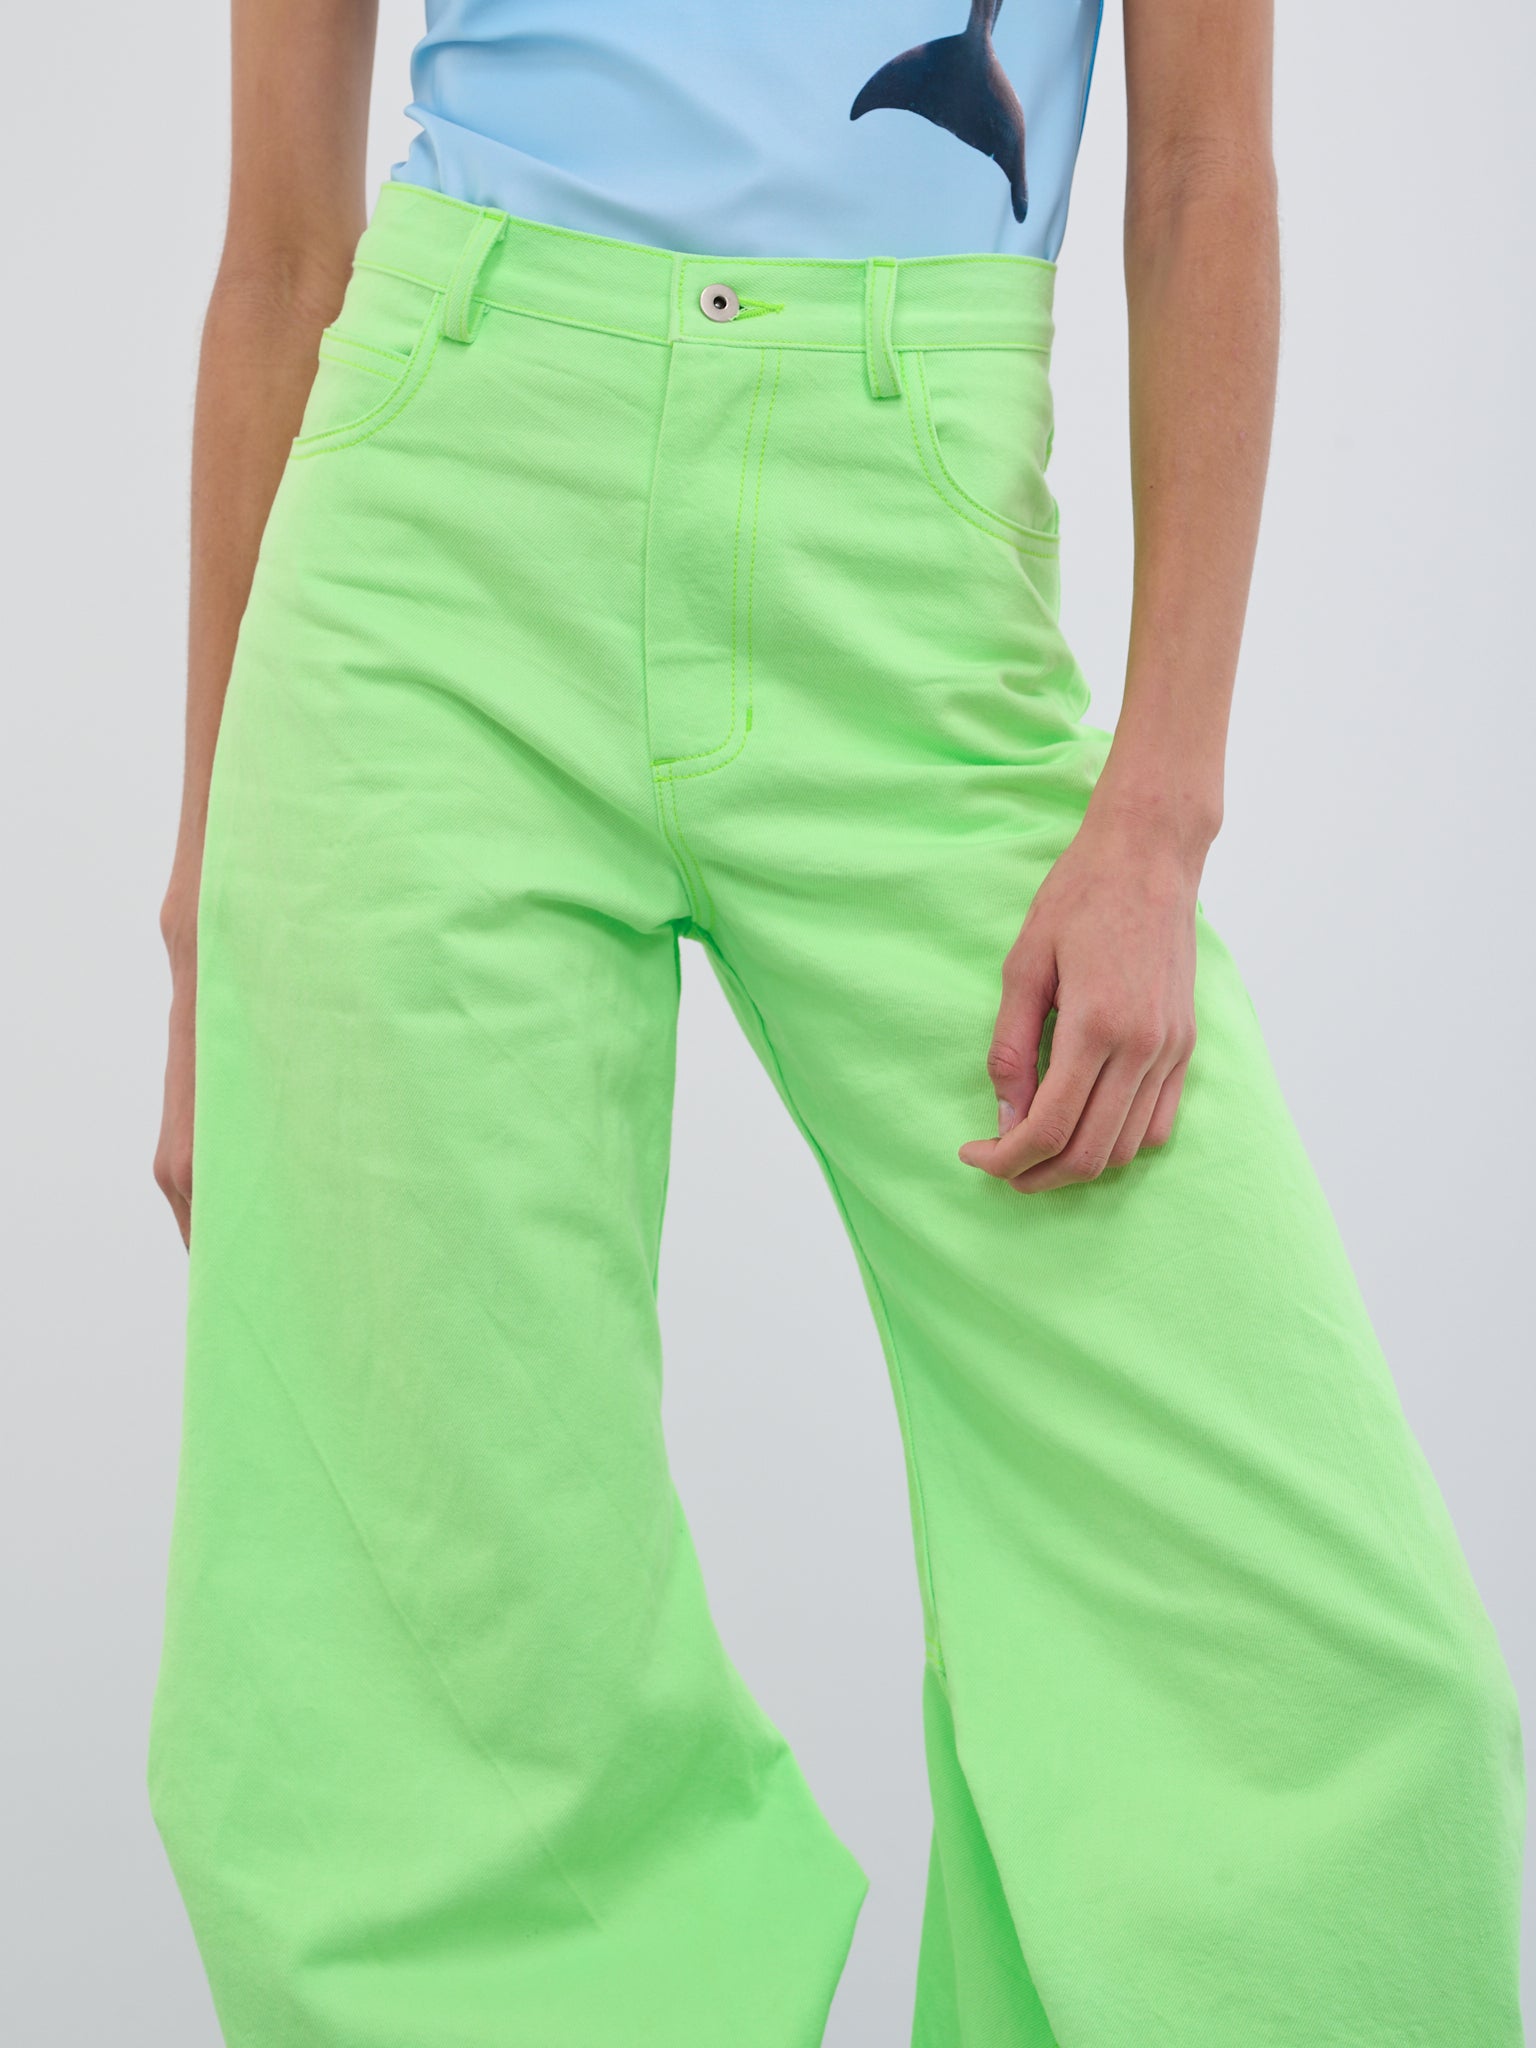 Lime Green Pants- Wide-Leg Pants - High-Waisted Green Pants - Lulus